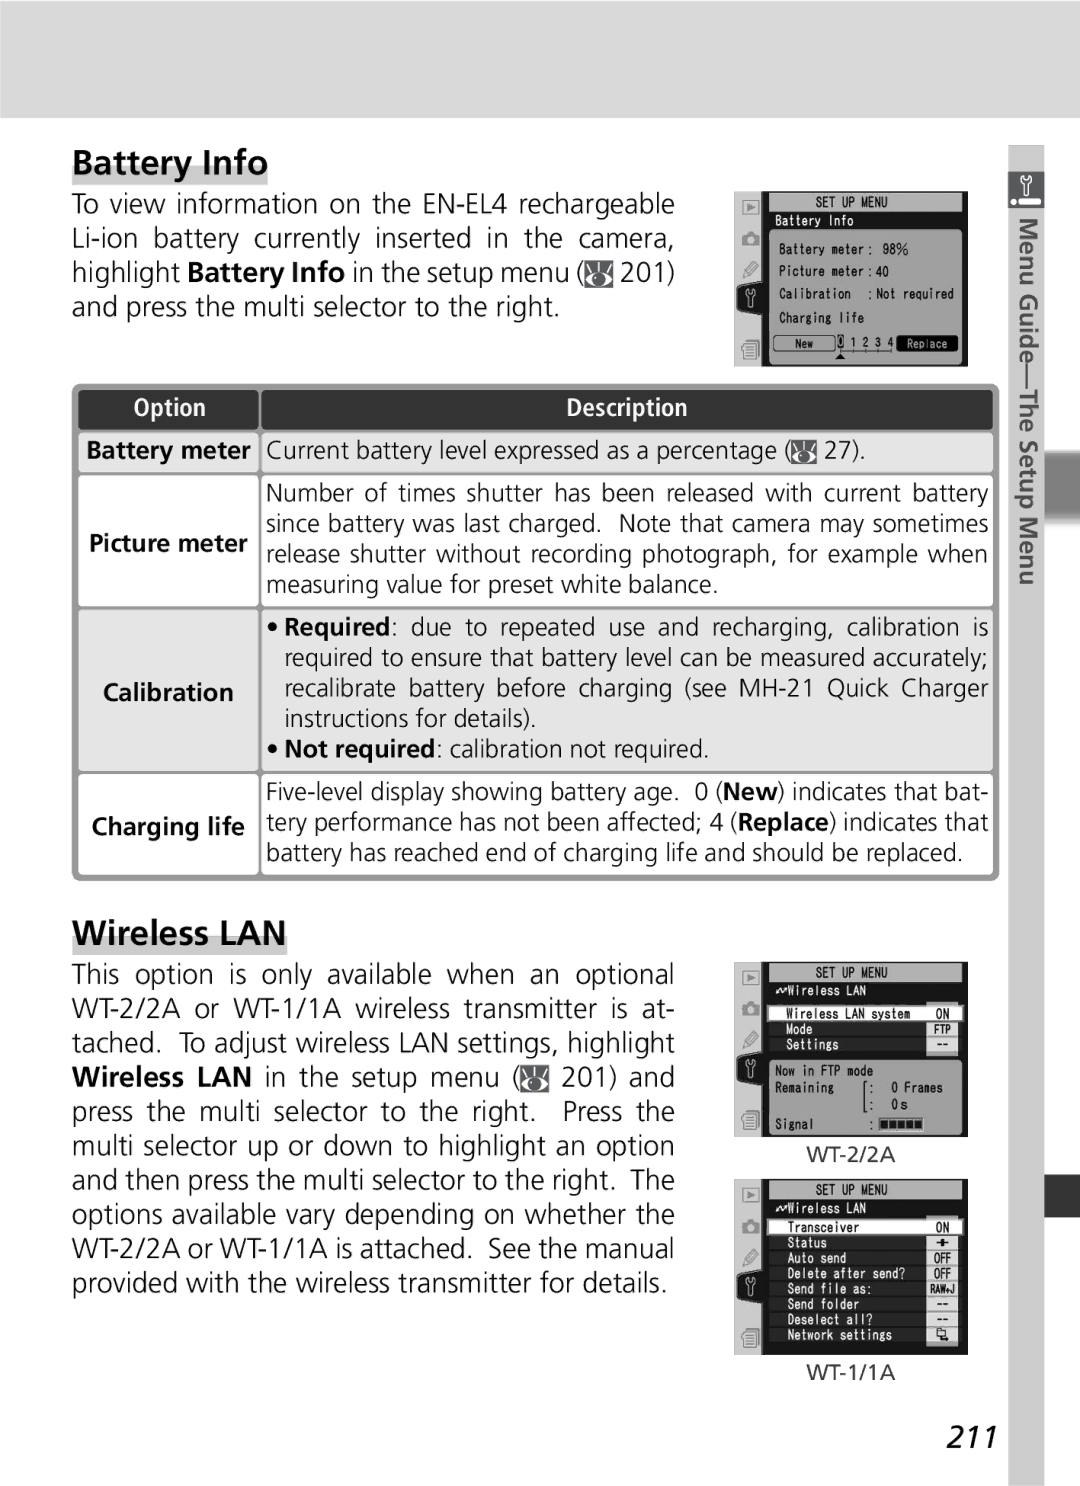 Nikon D2Hs manual Battery Info, Wireless LAN, 211, Calibration Charging life 